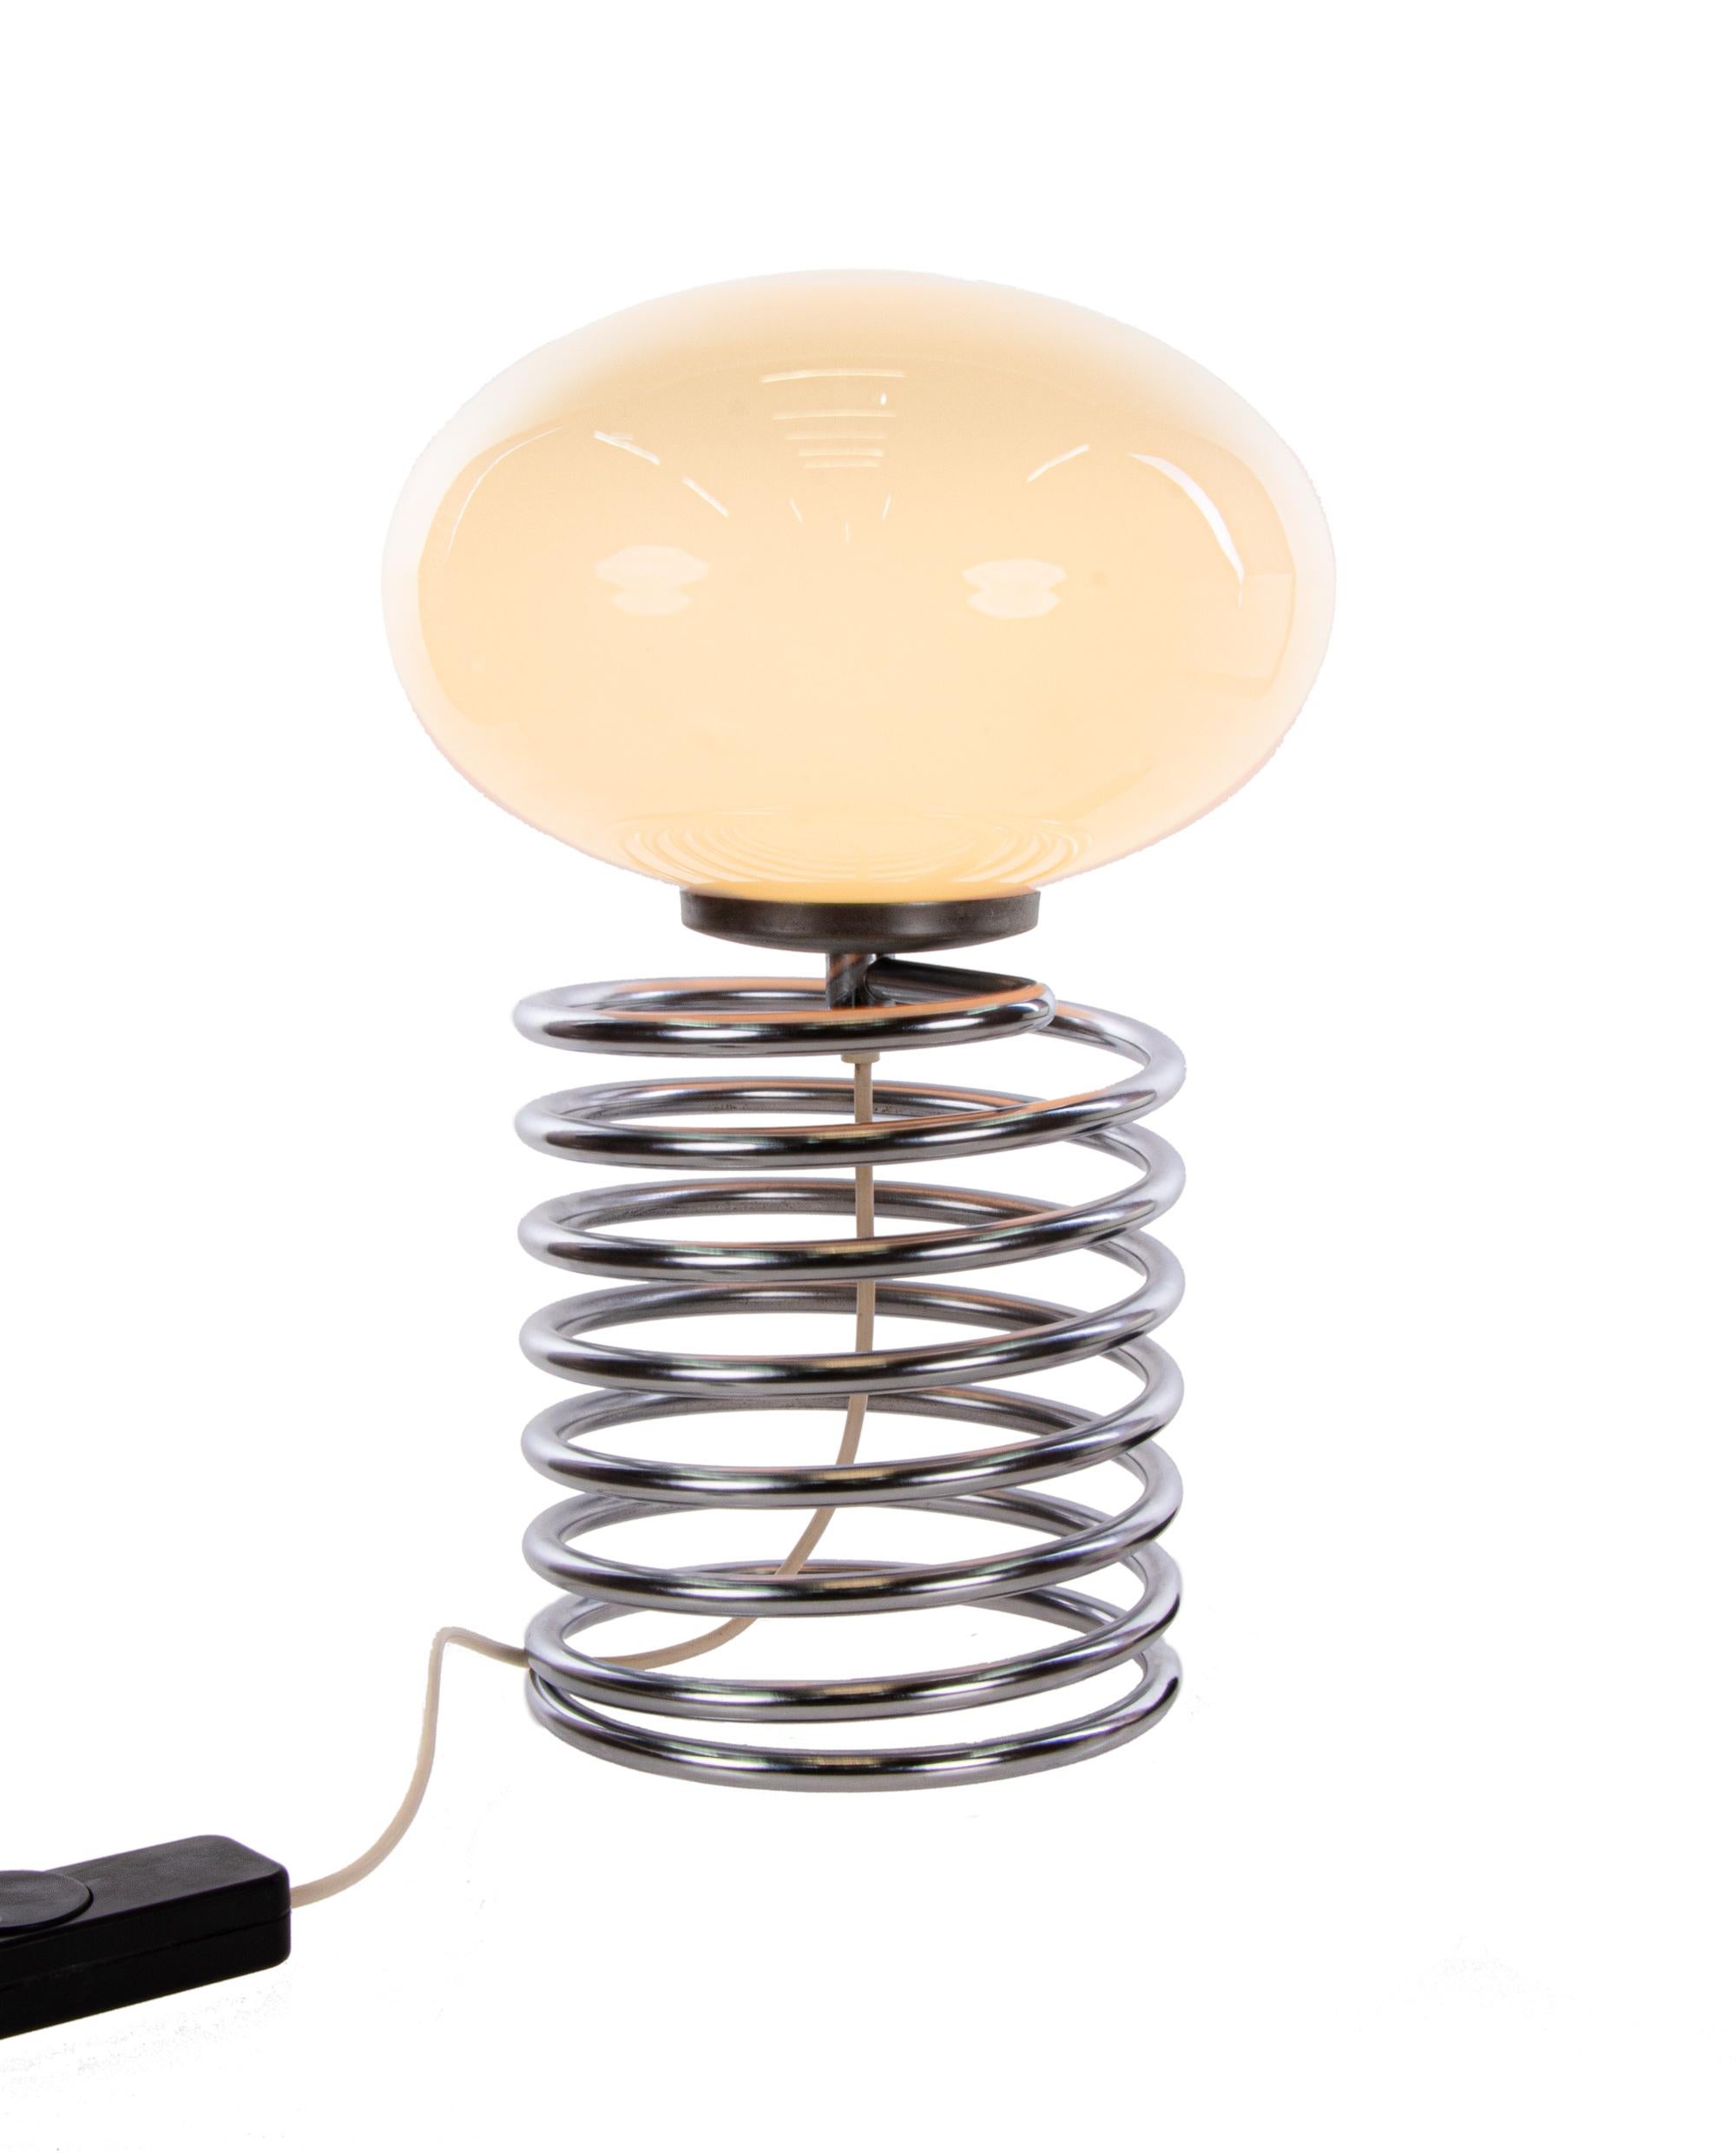 1965 Design M Ingo Maurer Medium Table Lamp ‘Spirale’ Glass & Chrome For Sale